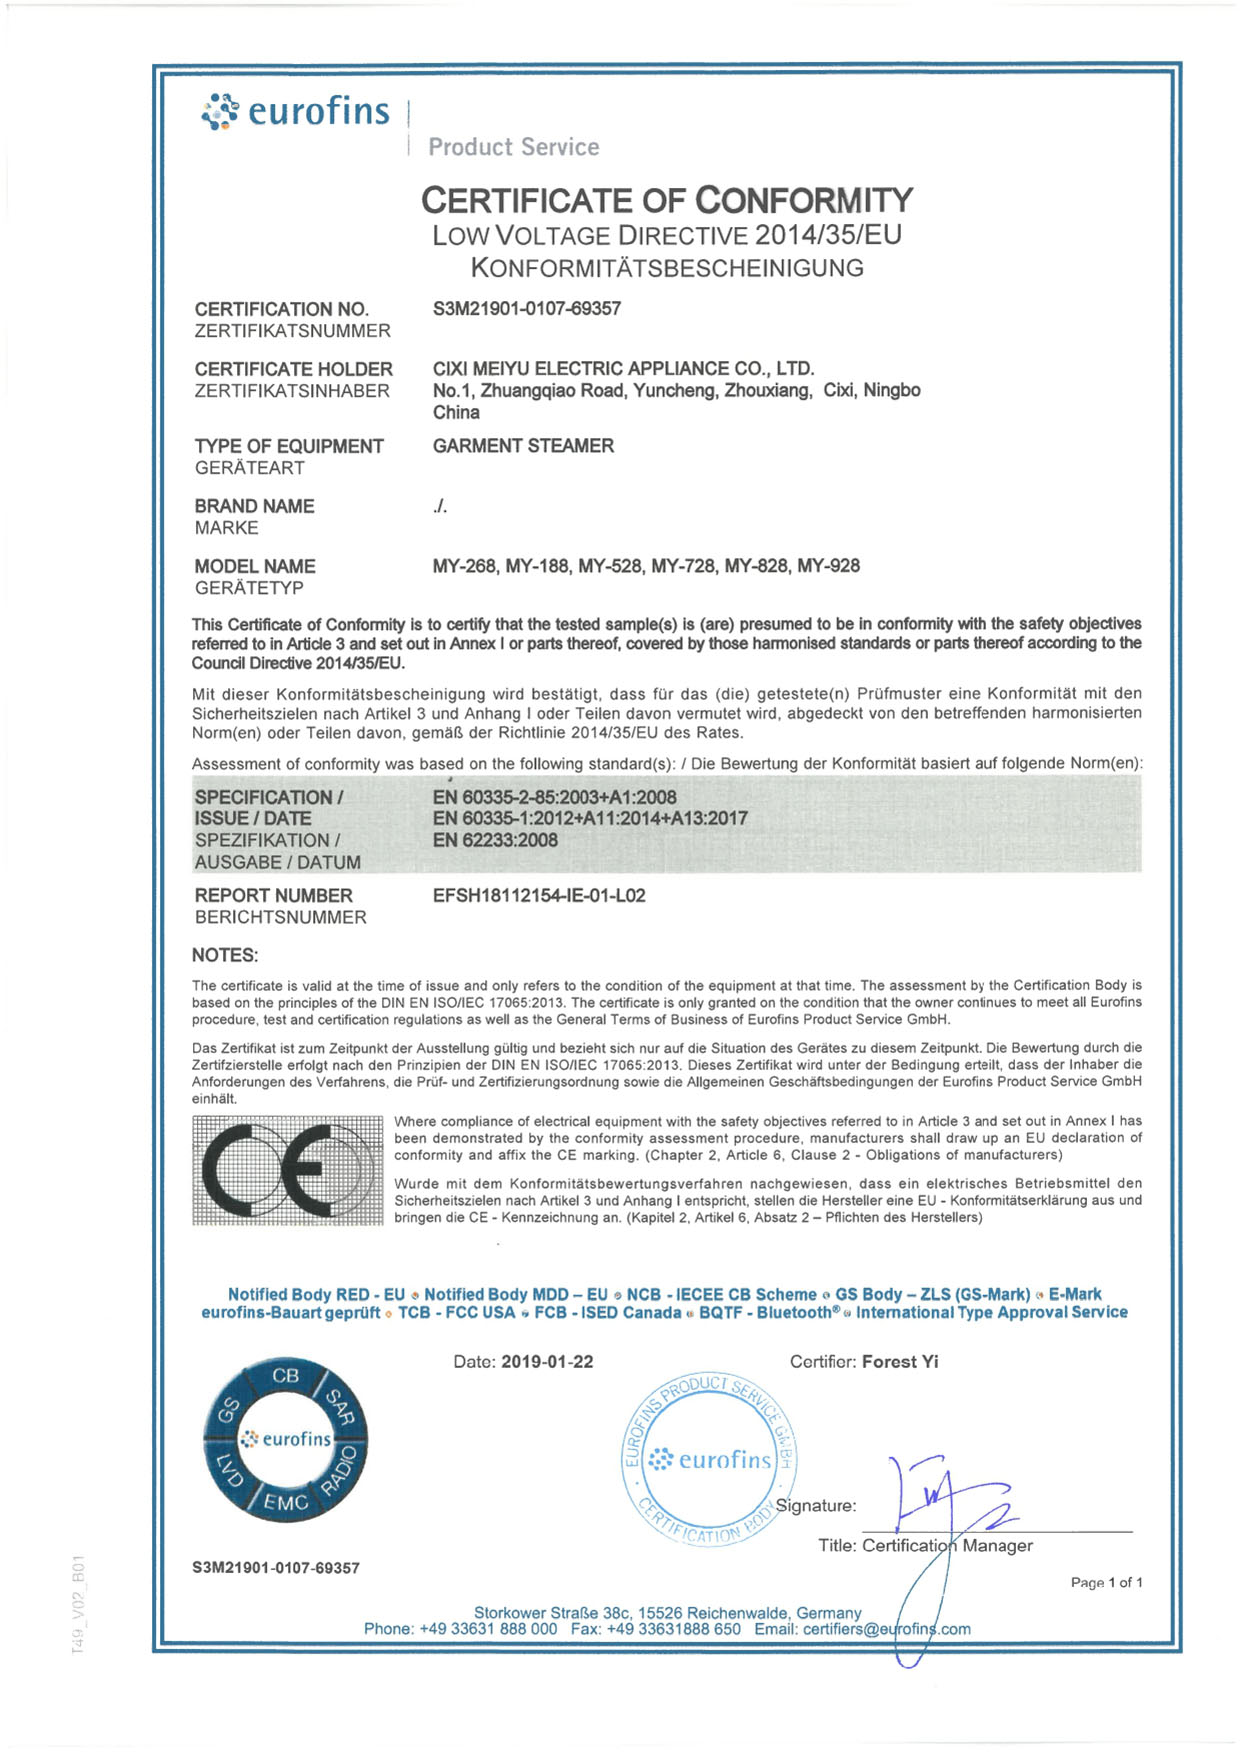 LVD-certifikat S3M21901-0107-69357_LVD CoC